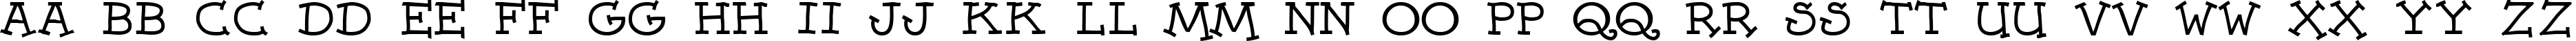 Пример написания английского алфавита шрифтом Dummies